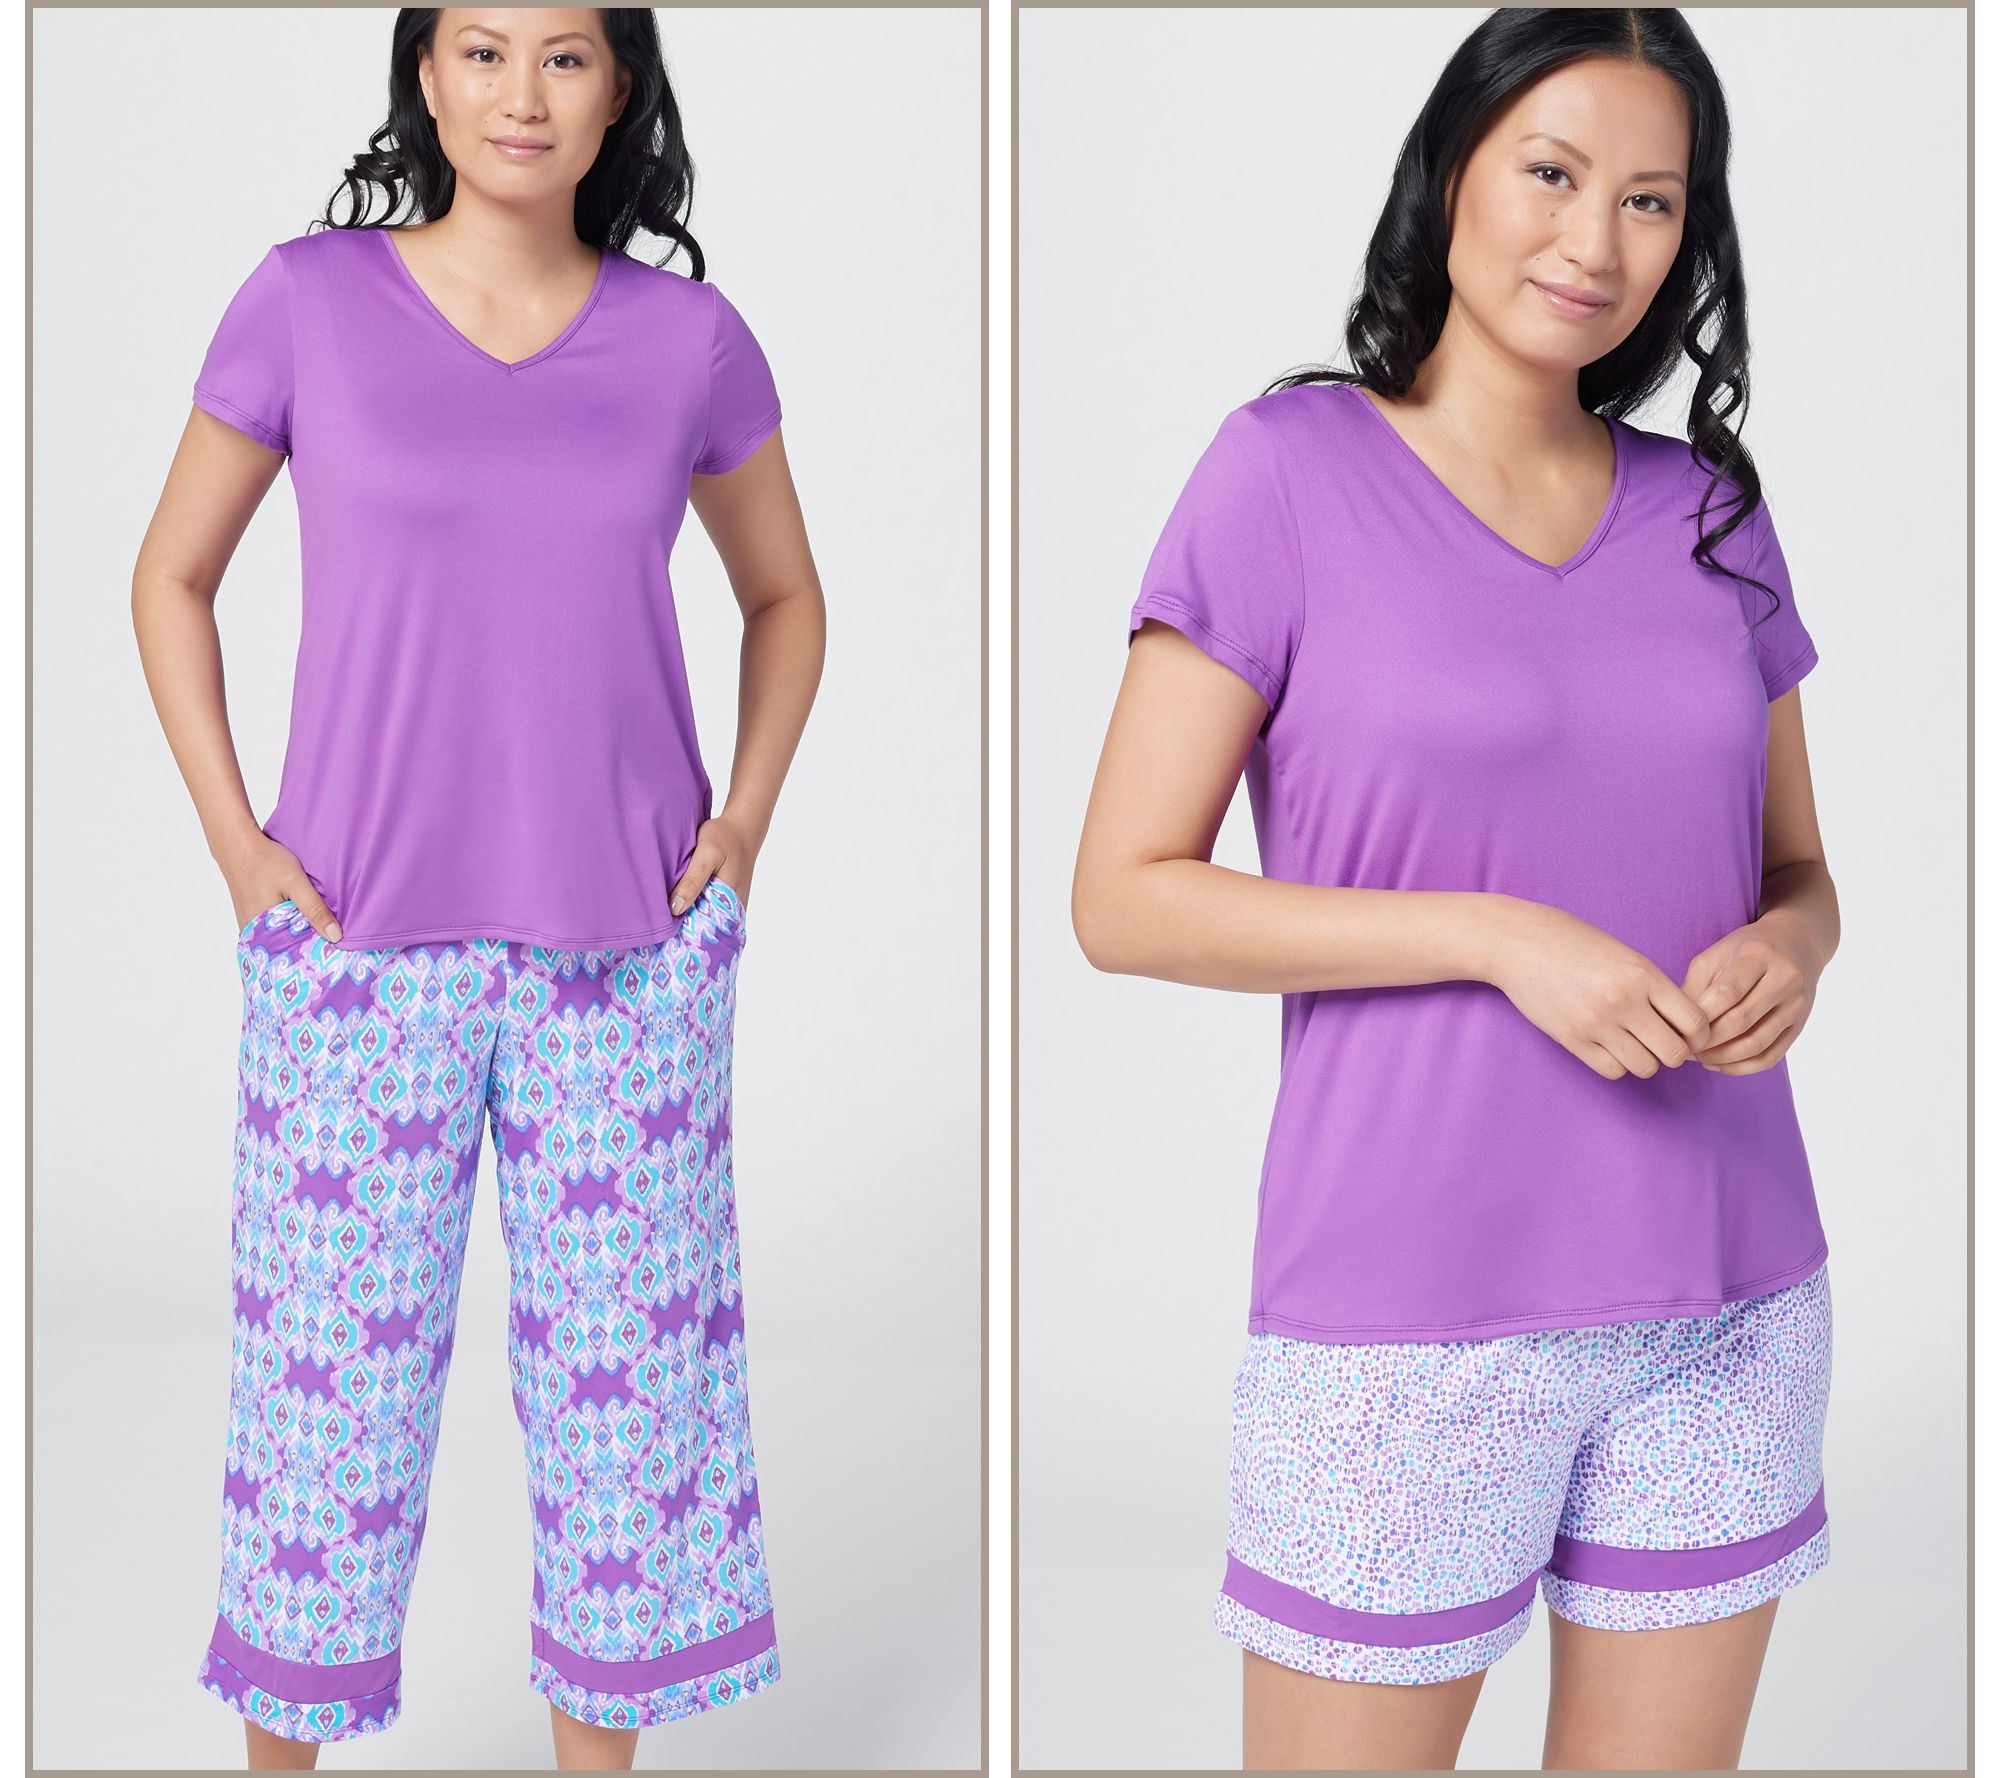 Women's Carole Hochman Cotton Short Sleeve Top & Bermuda Shorts Pajama Set